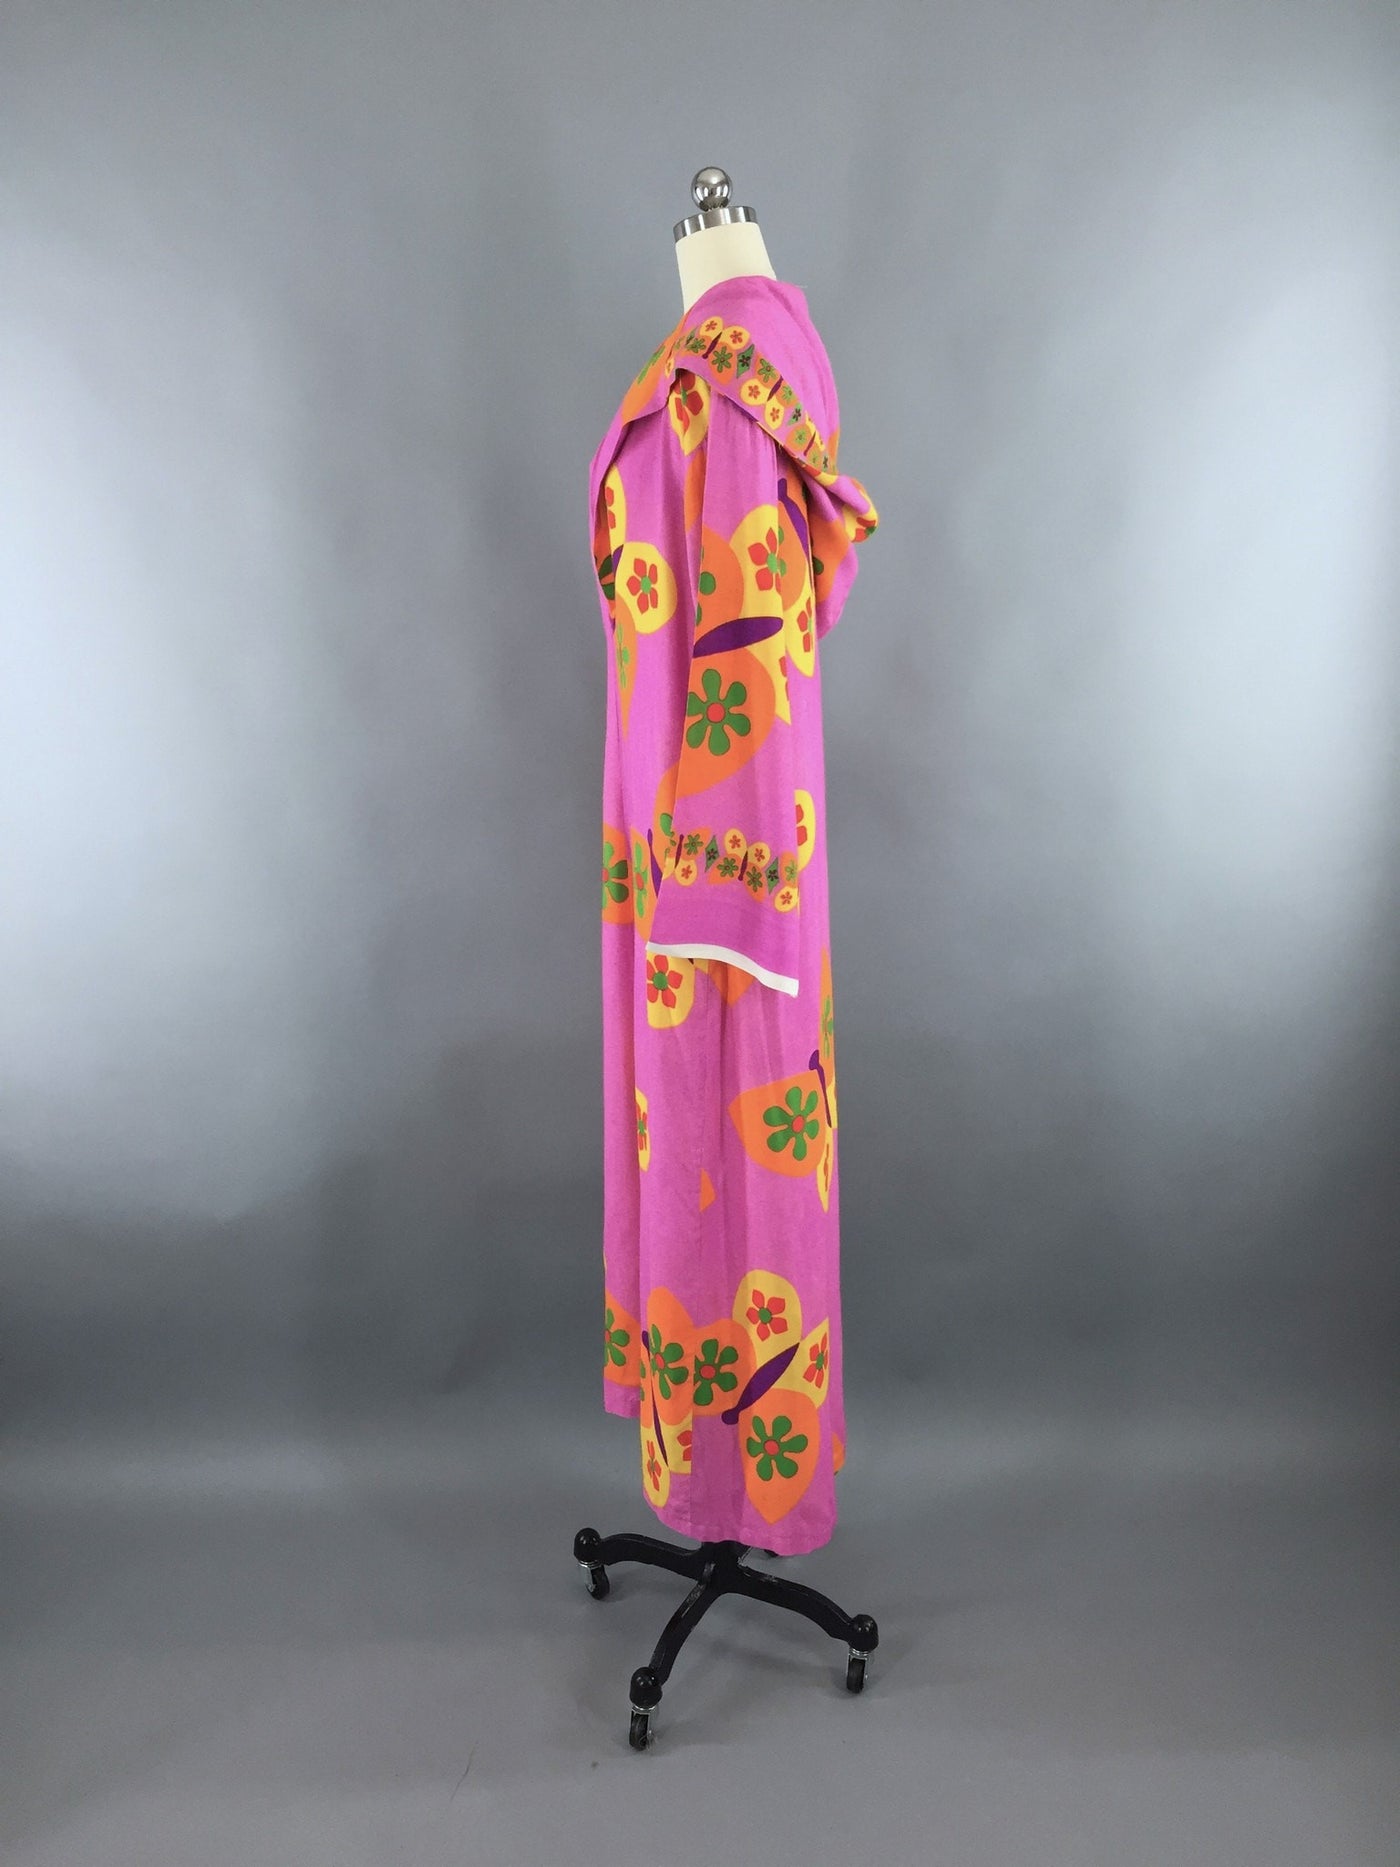 Vintage 1960s Caftan Dress / Hoodie Swim Coverup / Mod Neon Pink Butterfly Novelty Print - ThisBlueBird